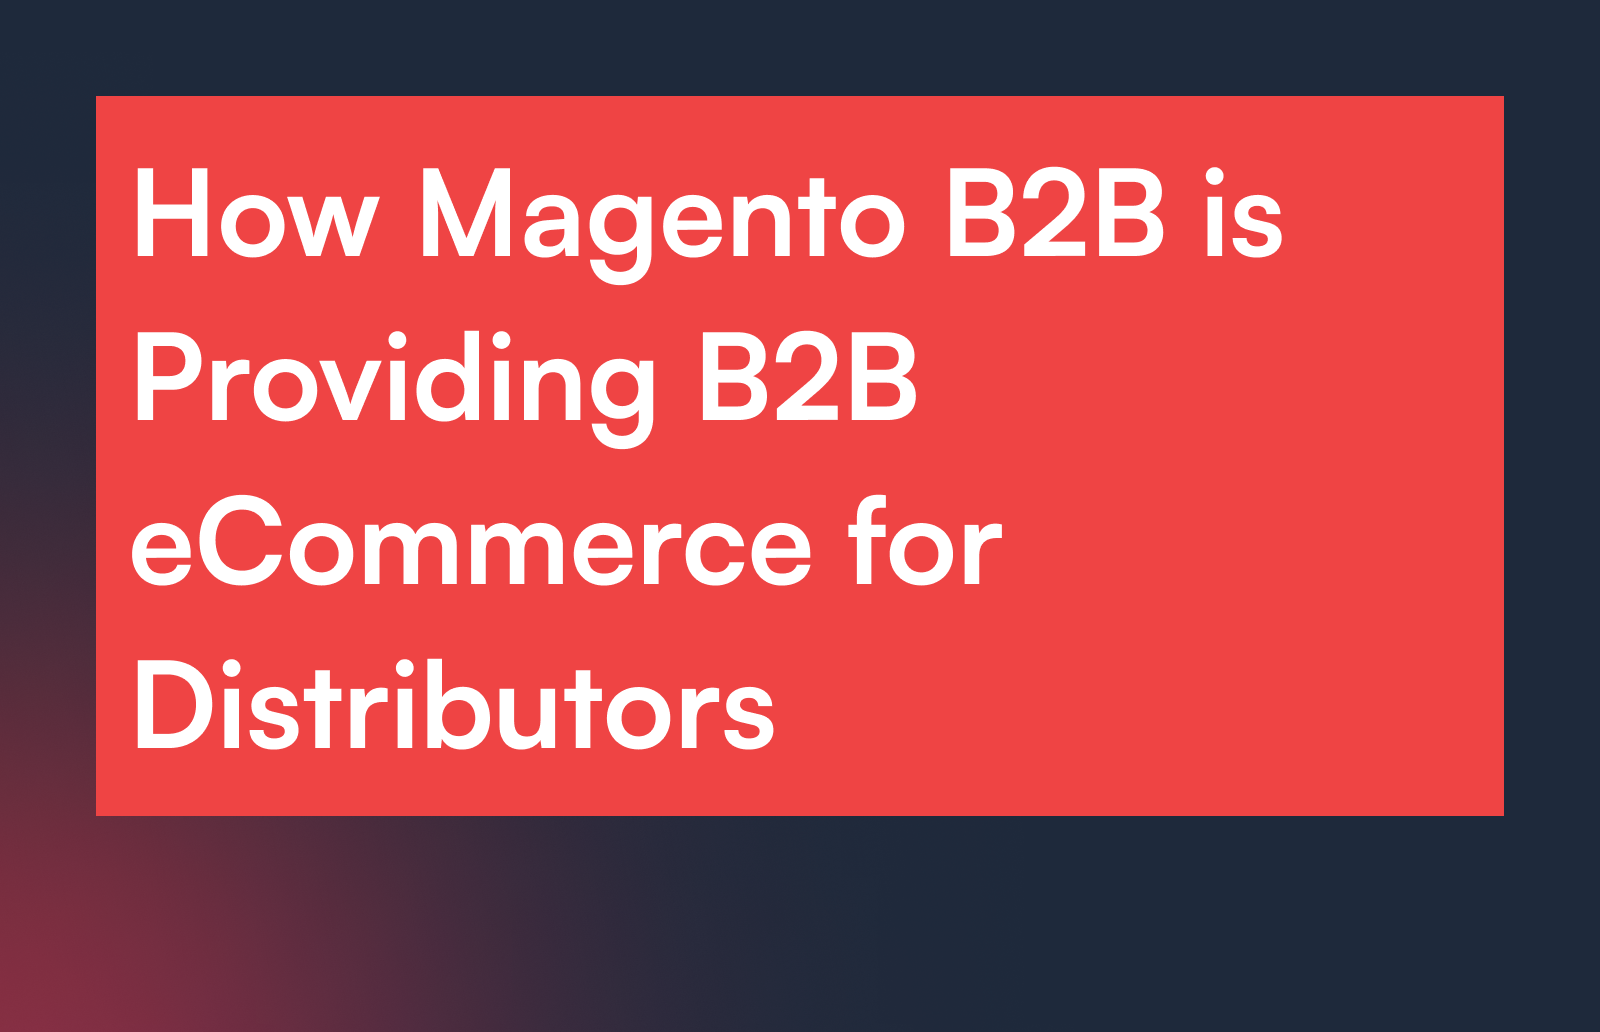 How Magento B2B is Providing B2B ecommerce for Distributors